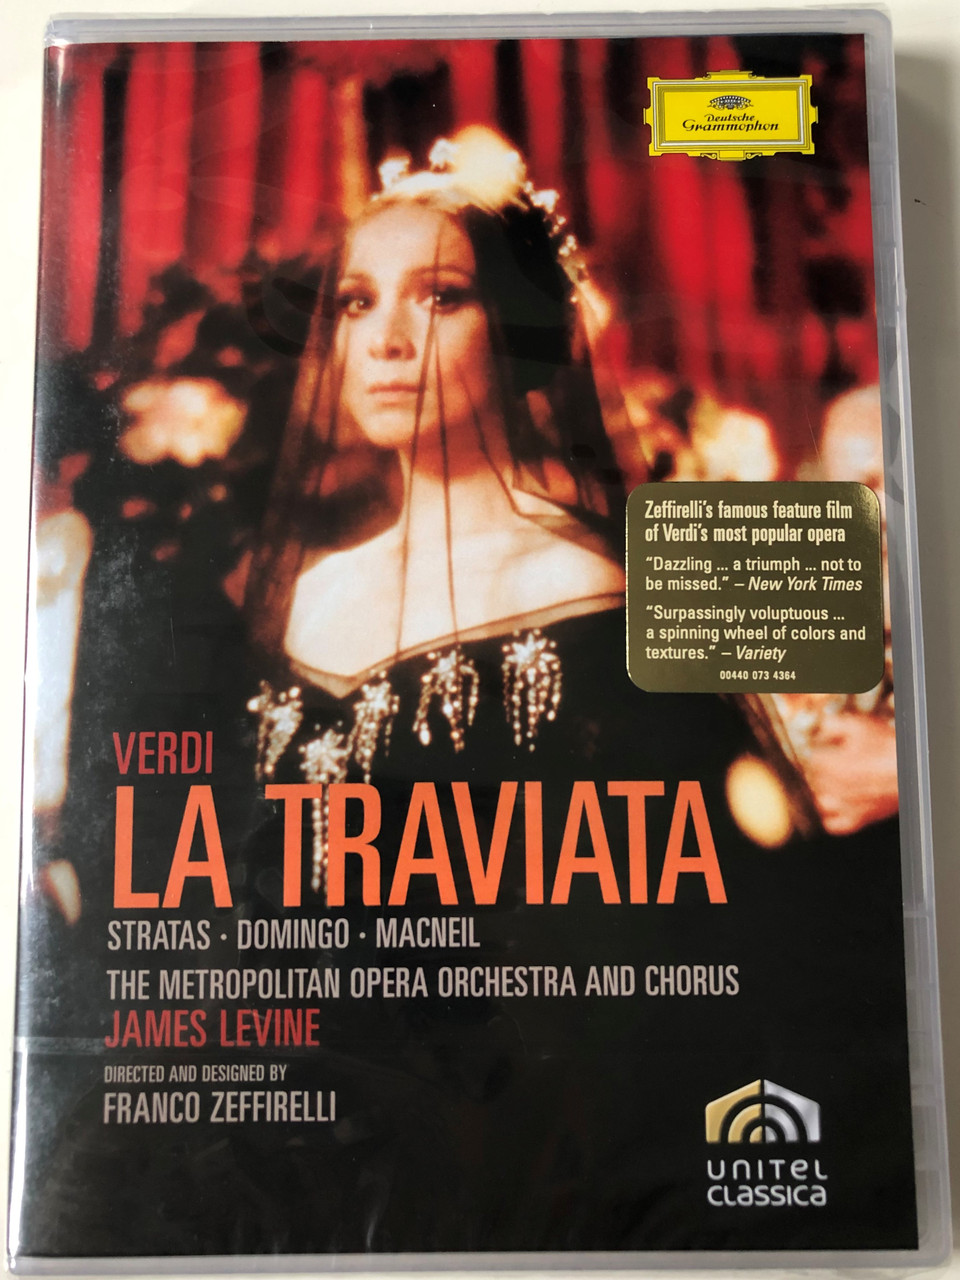 Verdi - La Traviata DVD 1995 / Directed by Franco Zeffirelli / The  Metropolitan Opera Orchestra and Chorus / Conducted by James Levine /  Unitel Classica - Deutsche Grammophon / Stratas - Domingo, Macneil -  bibleinmylanguage